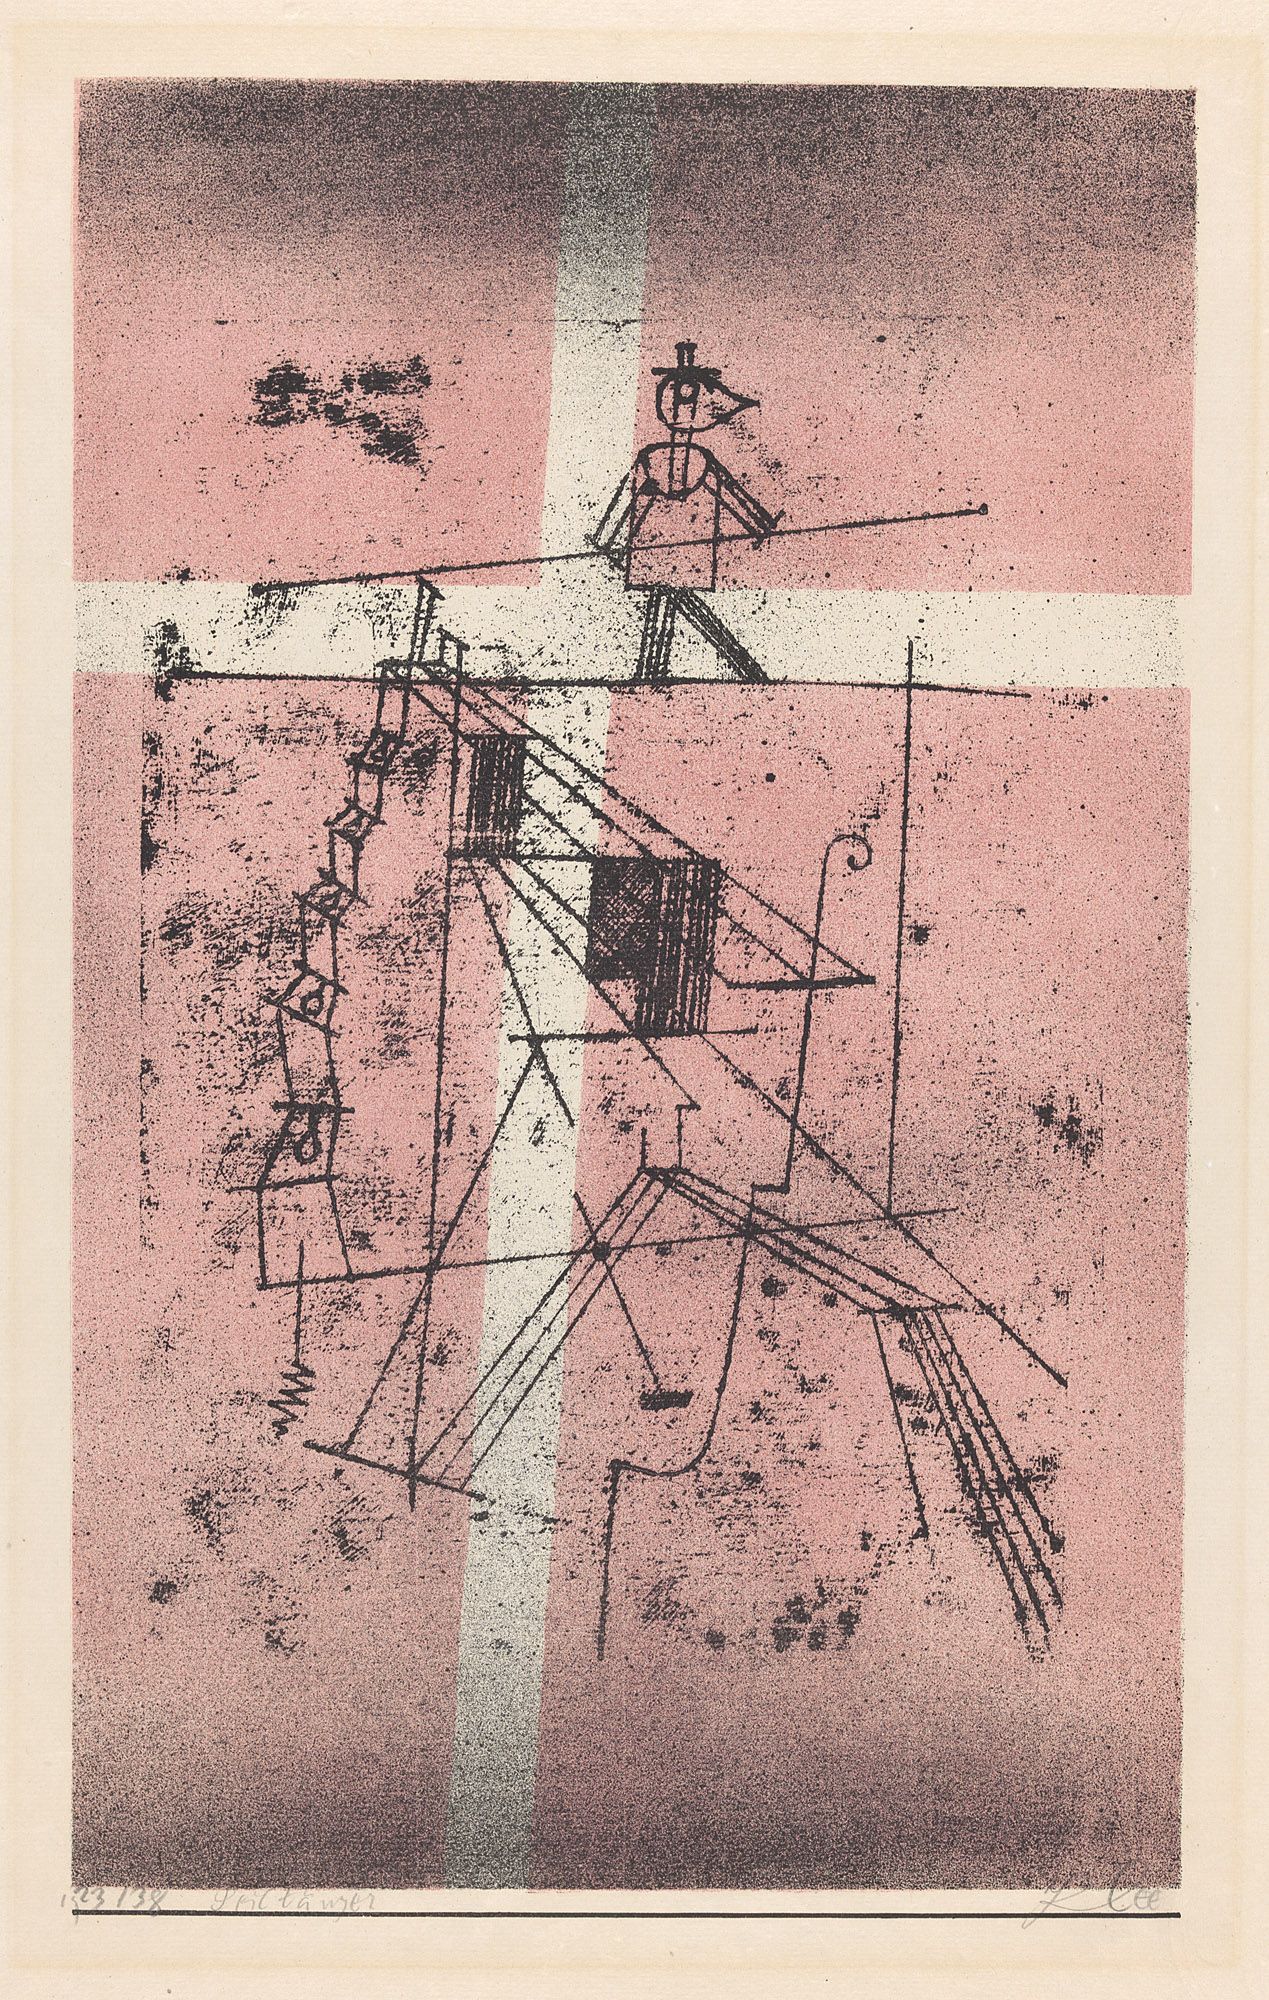 O Caminhante da Corda Bamba by Paul Klee - 1923 - 48,7 x 32,2 cm  